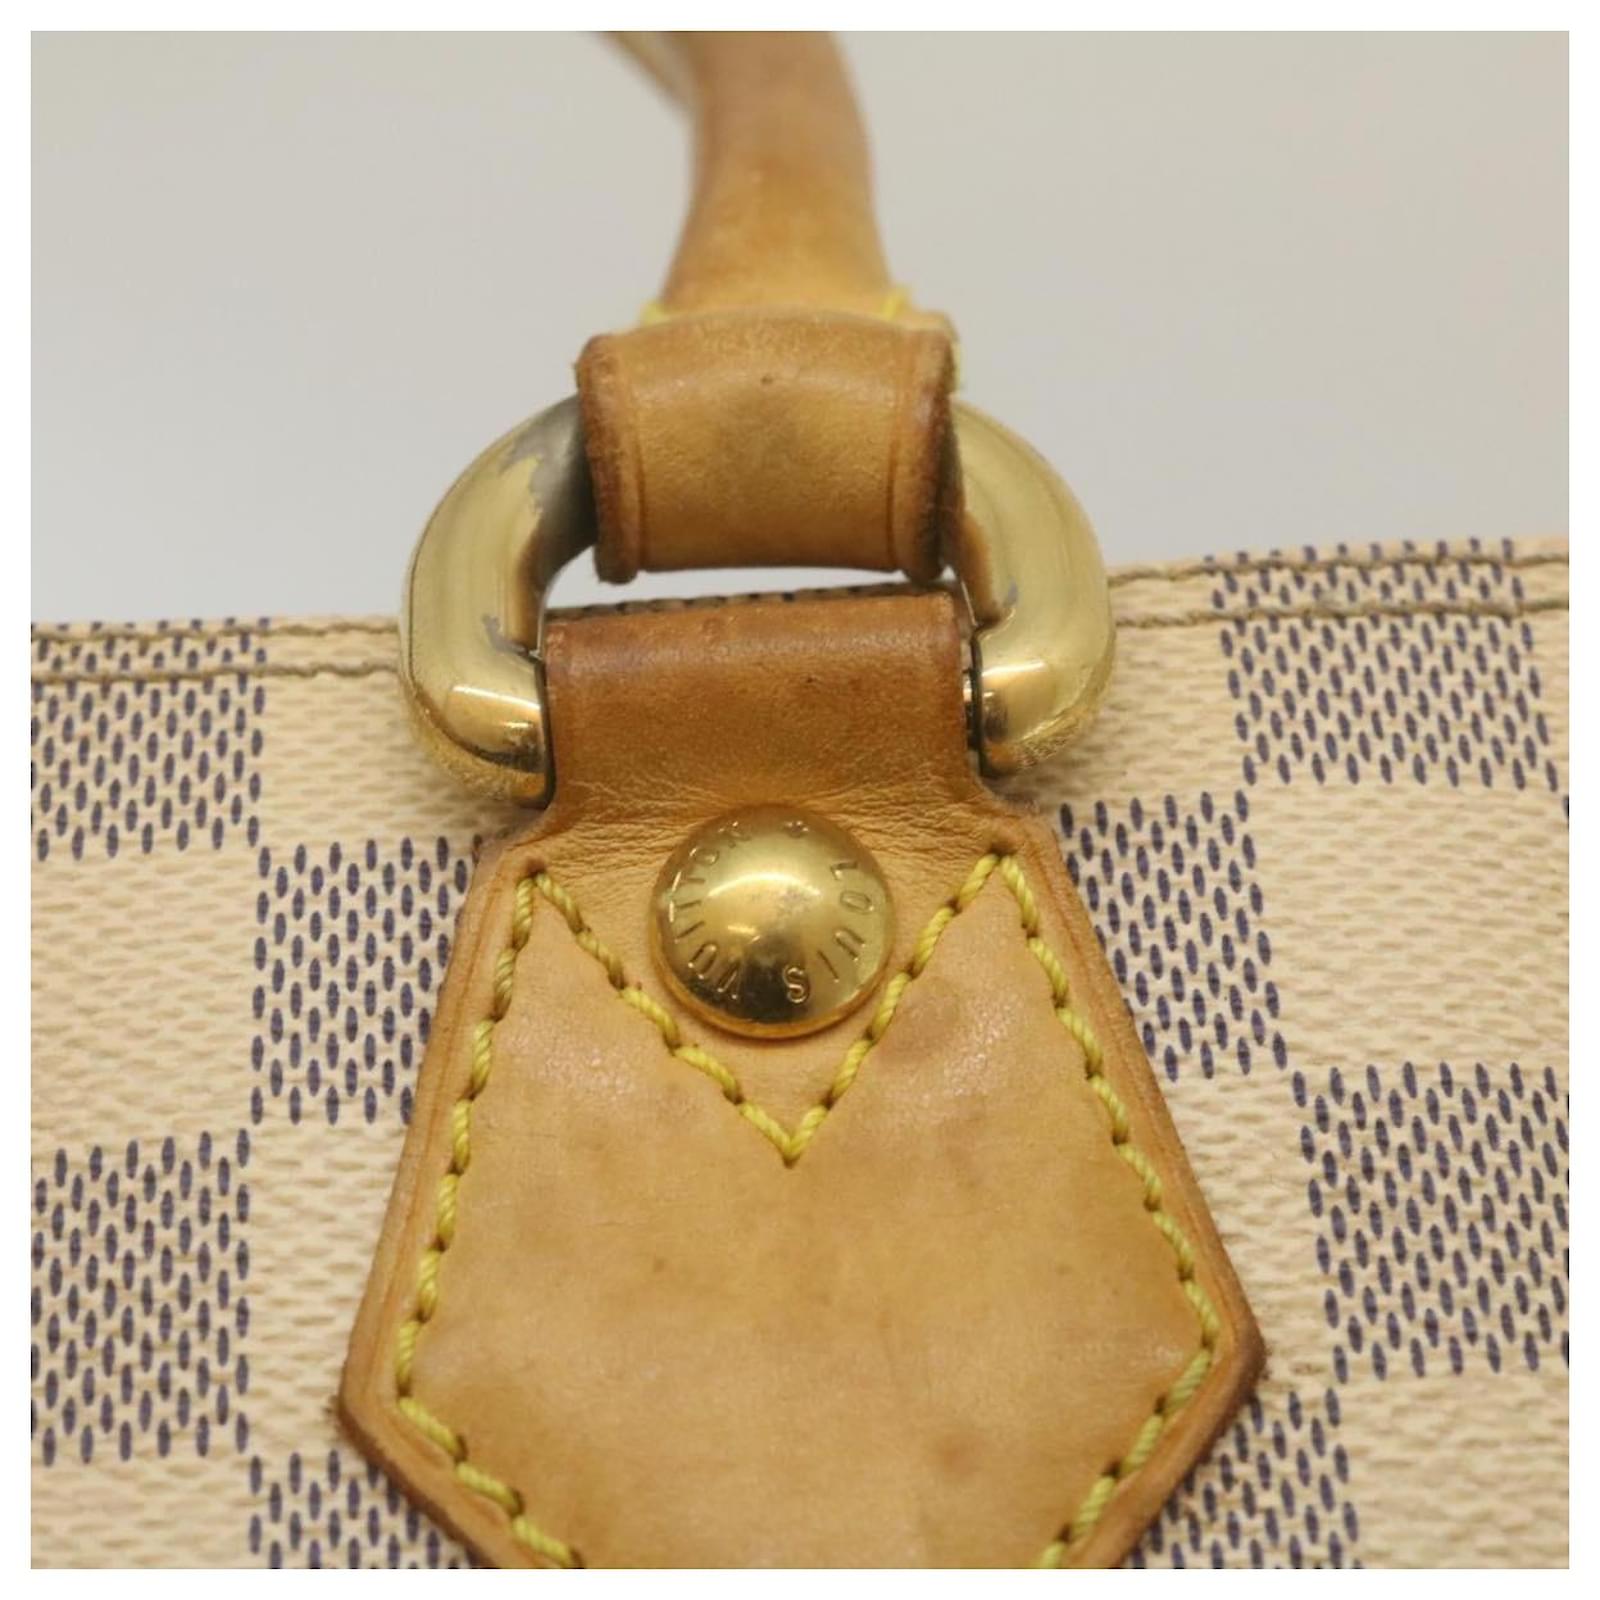 Handbag Louis Vuitton Saleya PM Azur Damier N51186 123070038